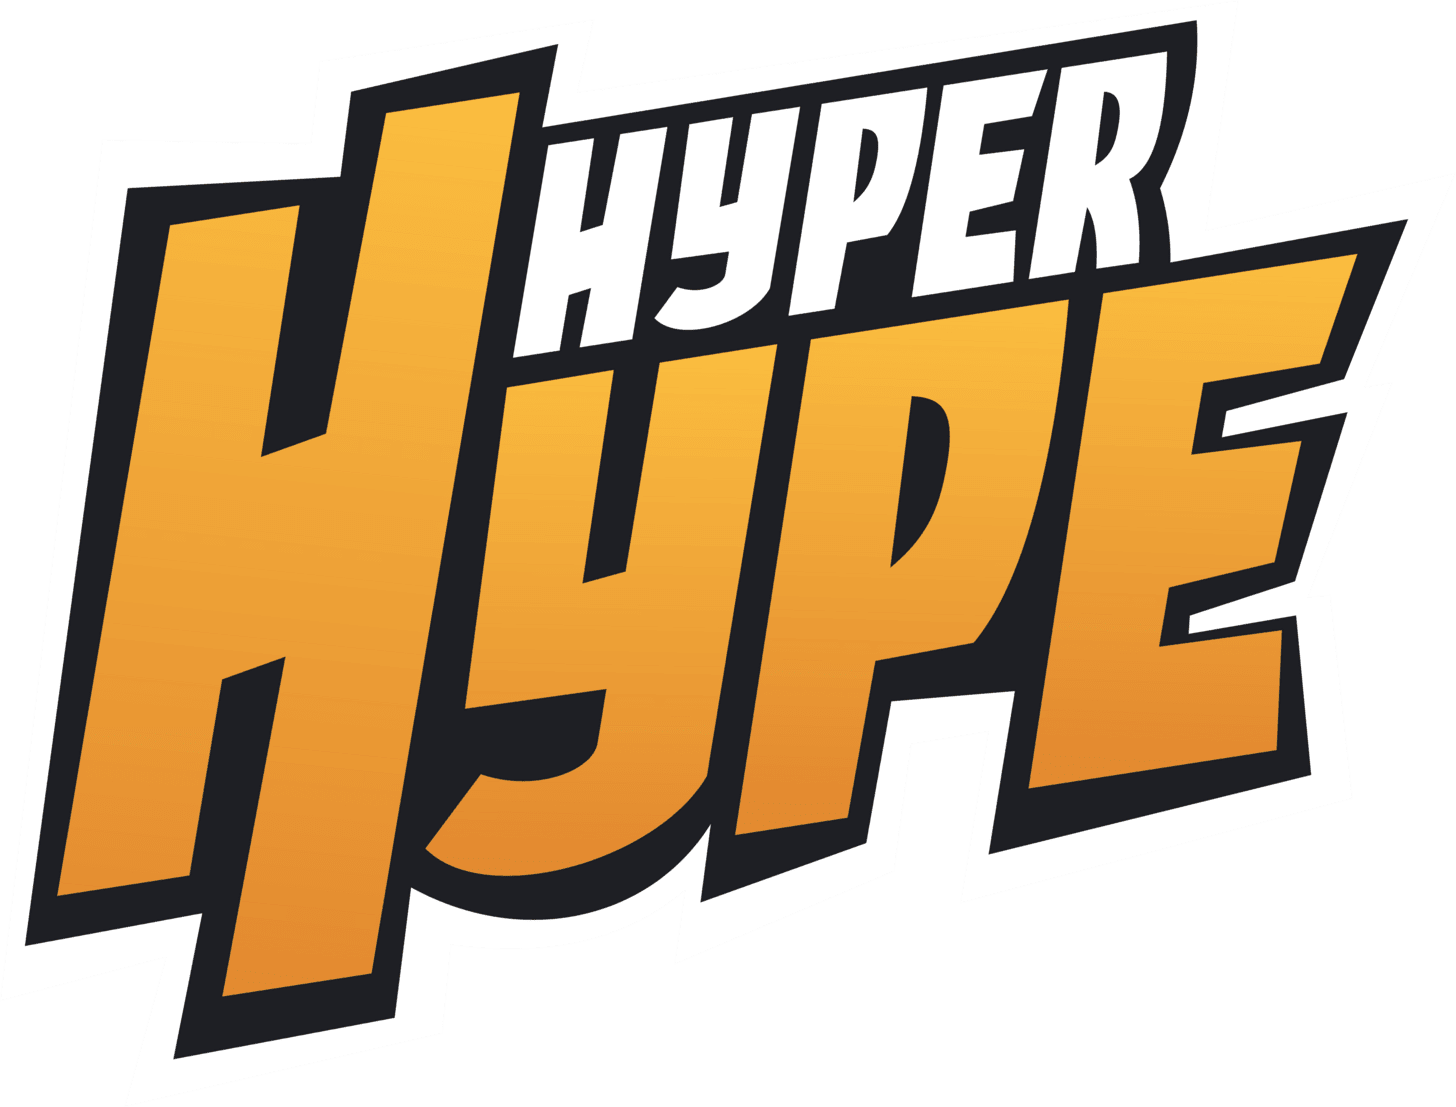 Hyper Hype